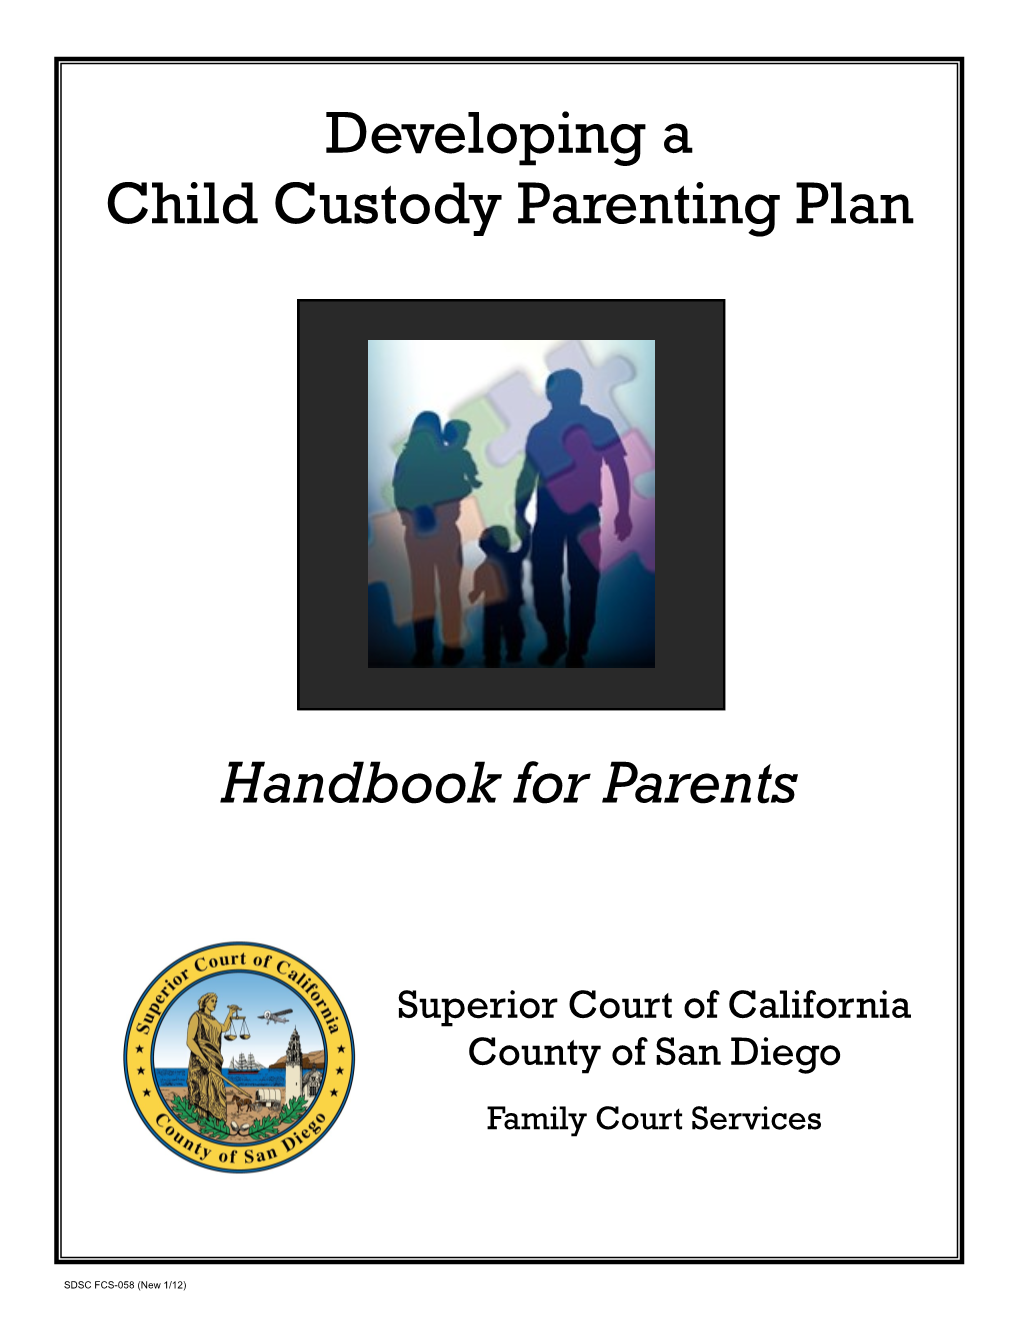 Developing a Child Custody Parenting Plan